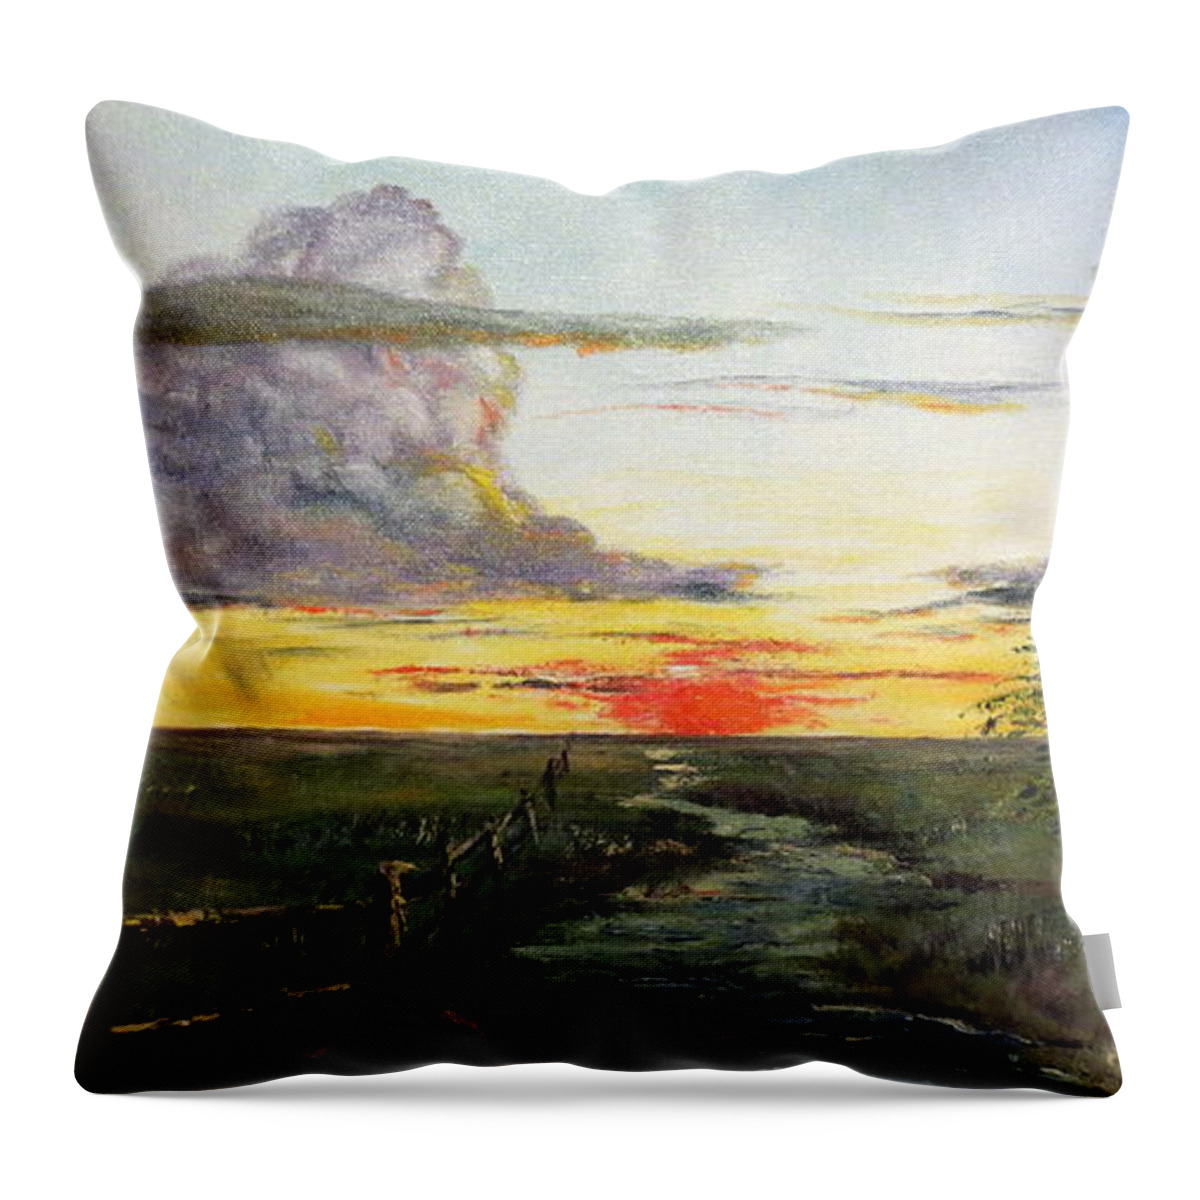 Nebraska Throw Pillow featuring the painting Nebraska Sunset by Lee Piper